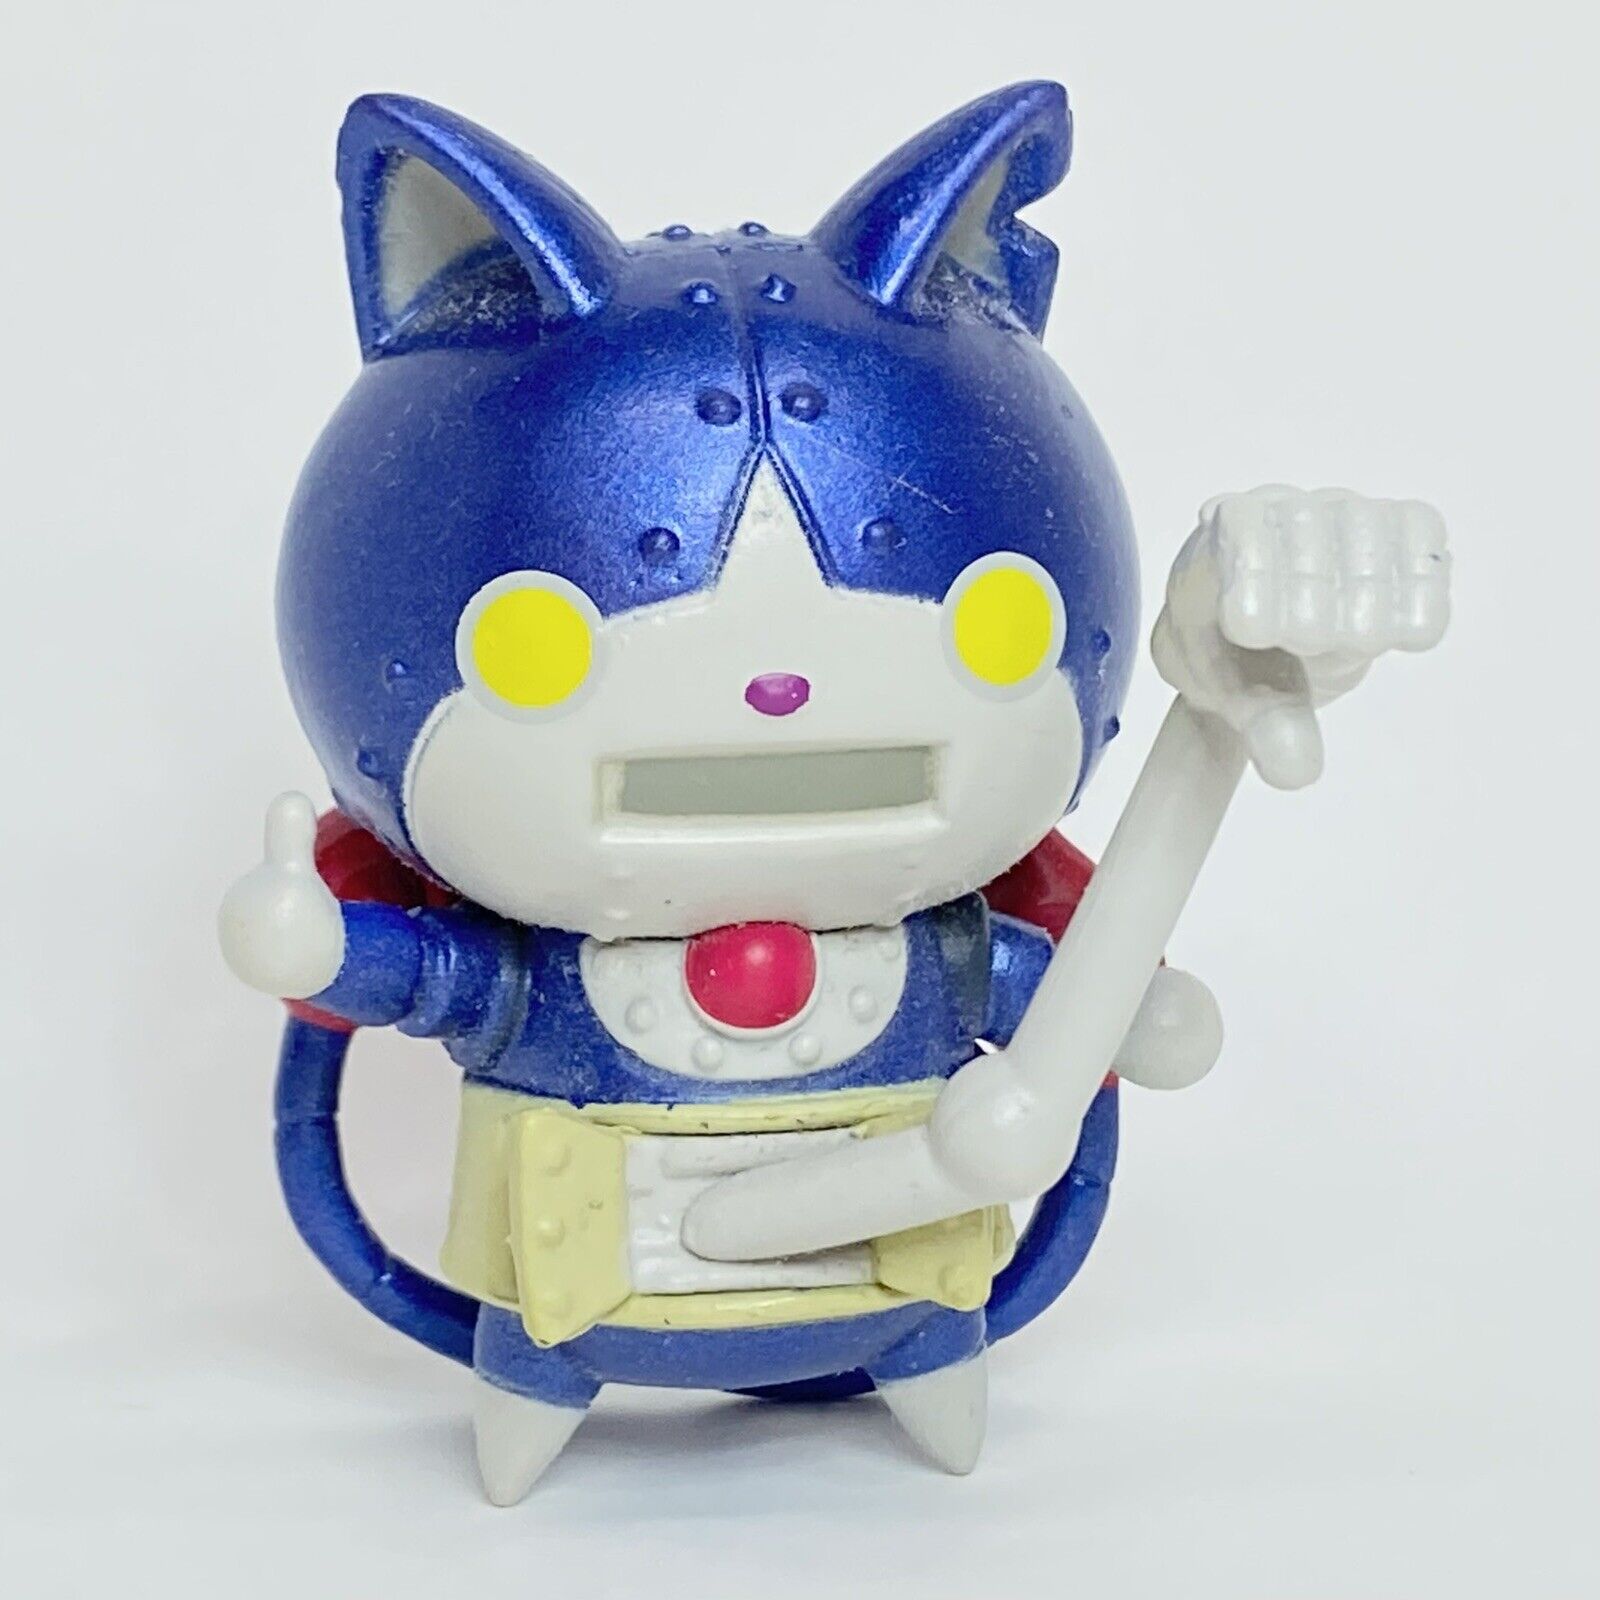 Yo-Kai Watch Robonyan Blue Robot Cat Anime 2.5” Figure Belly Arm Hasbro 2015